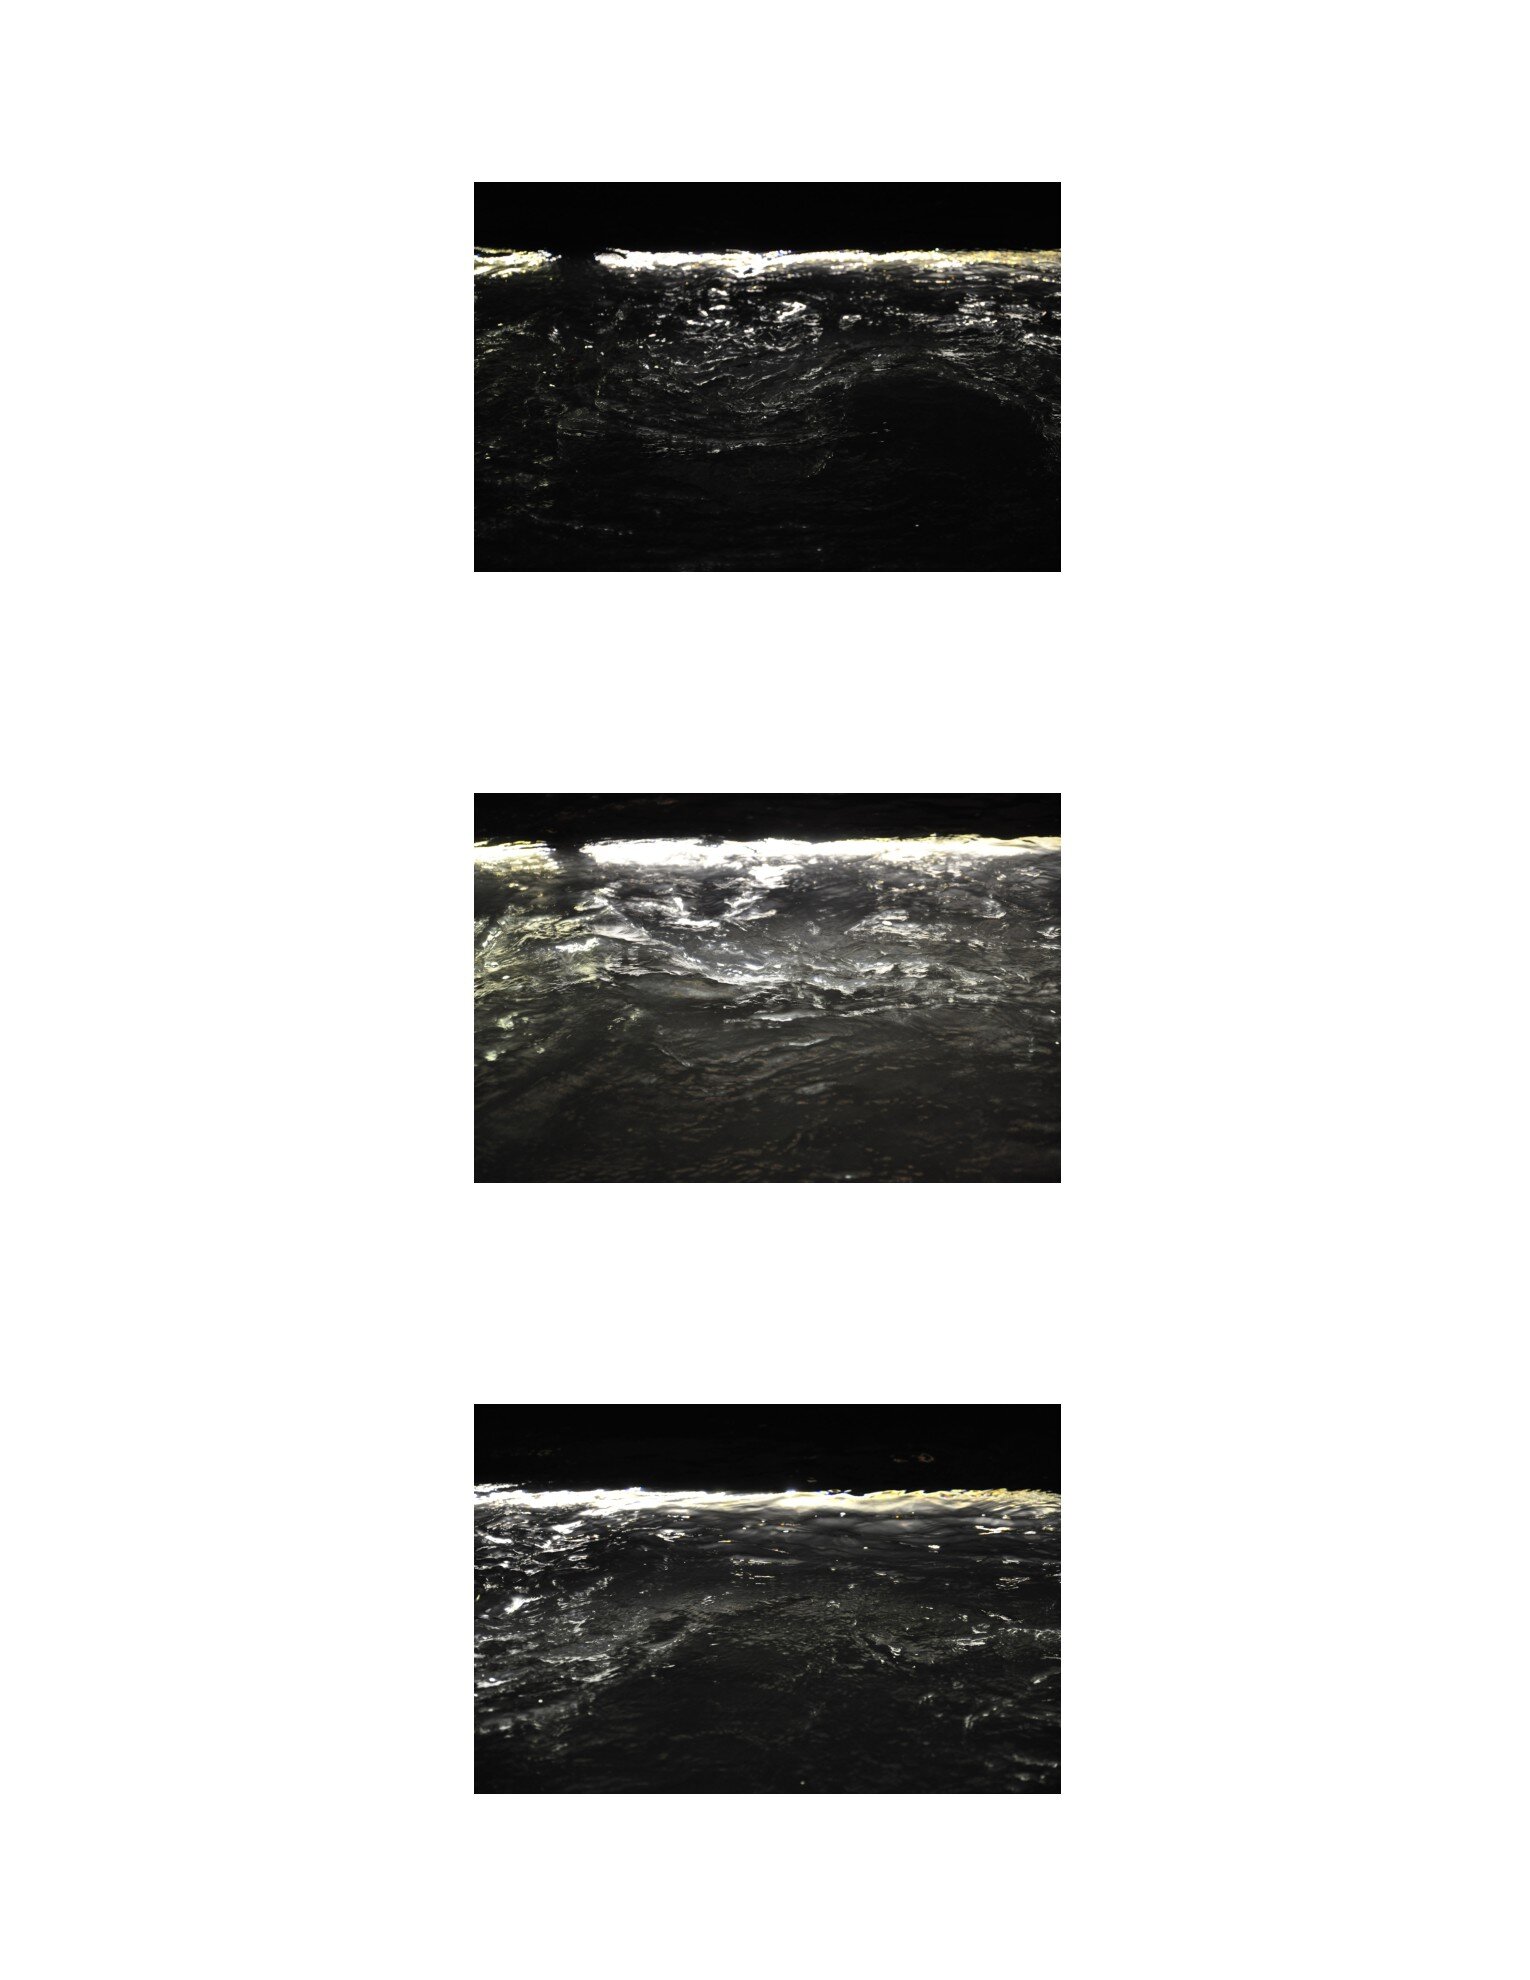 Water 03a + b + c, 2012 – Triptych